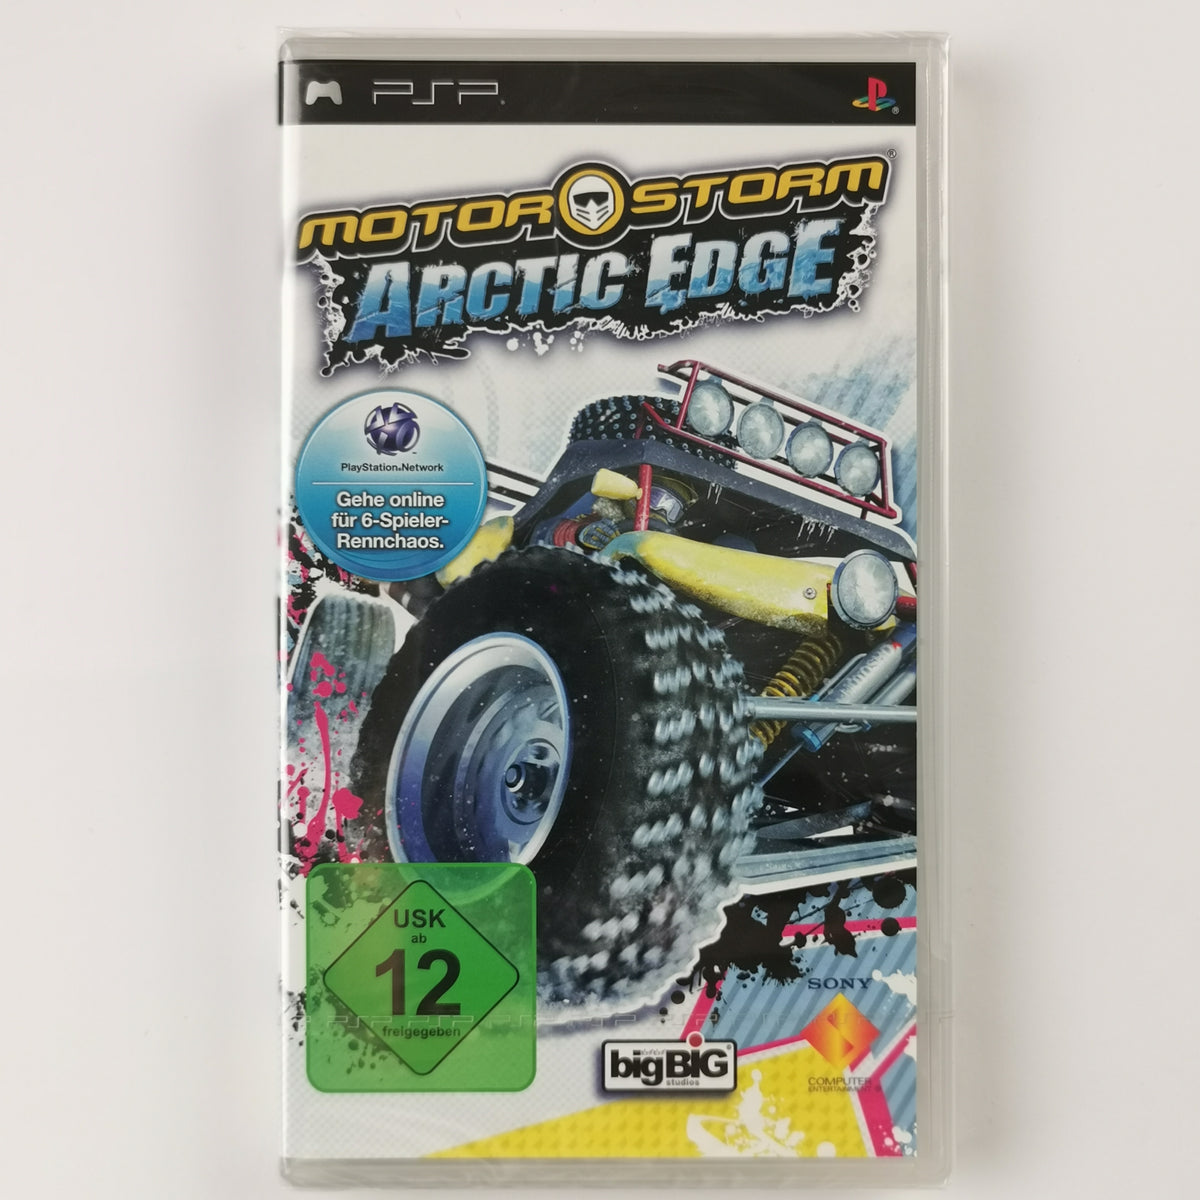 MotorStorm: Arctic Edge PSP [PSP]